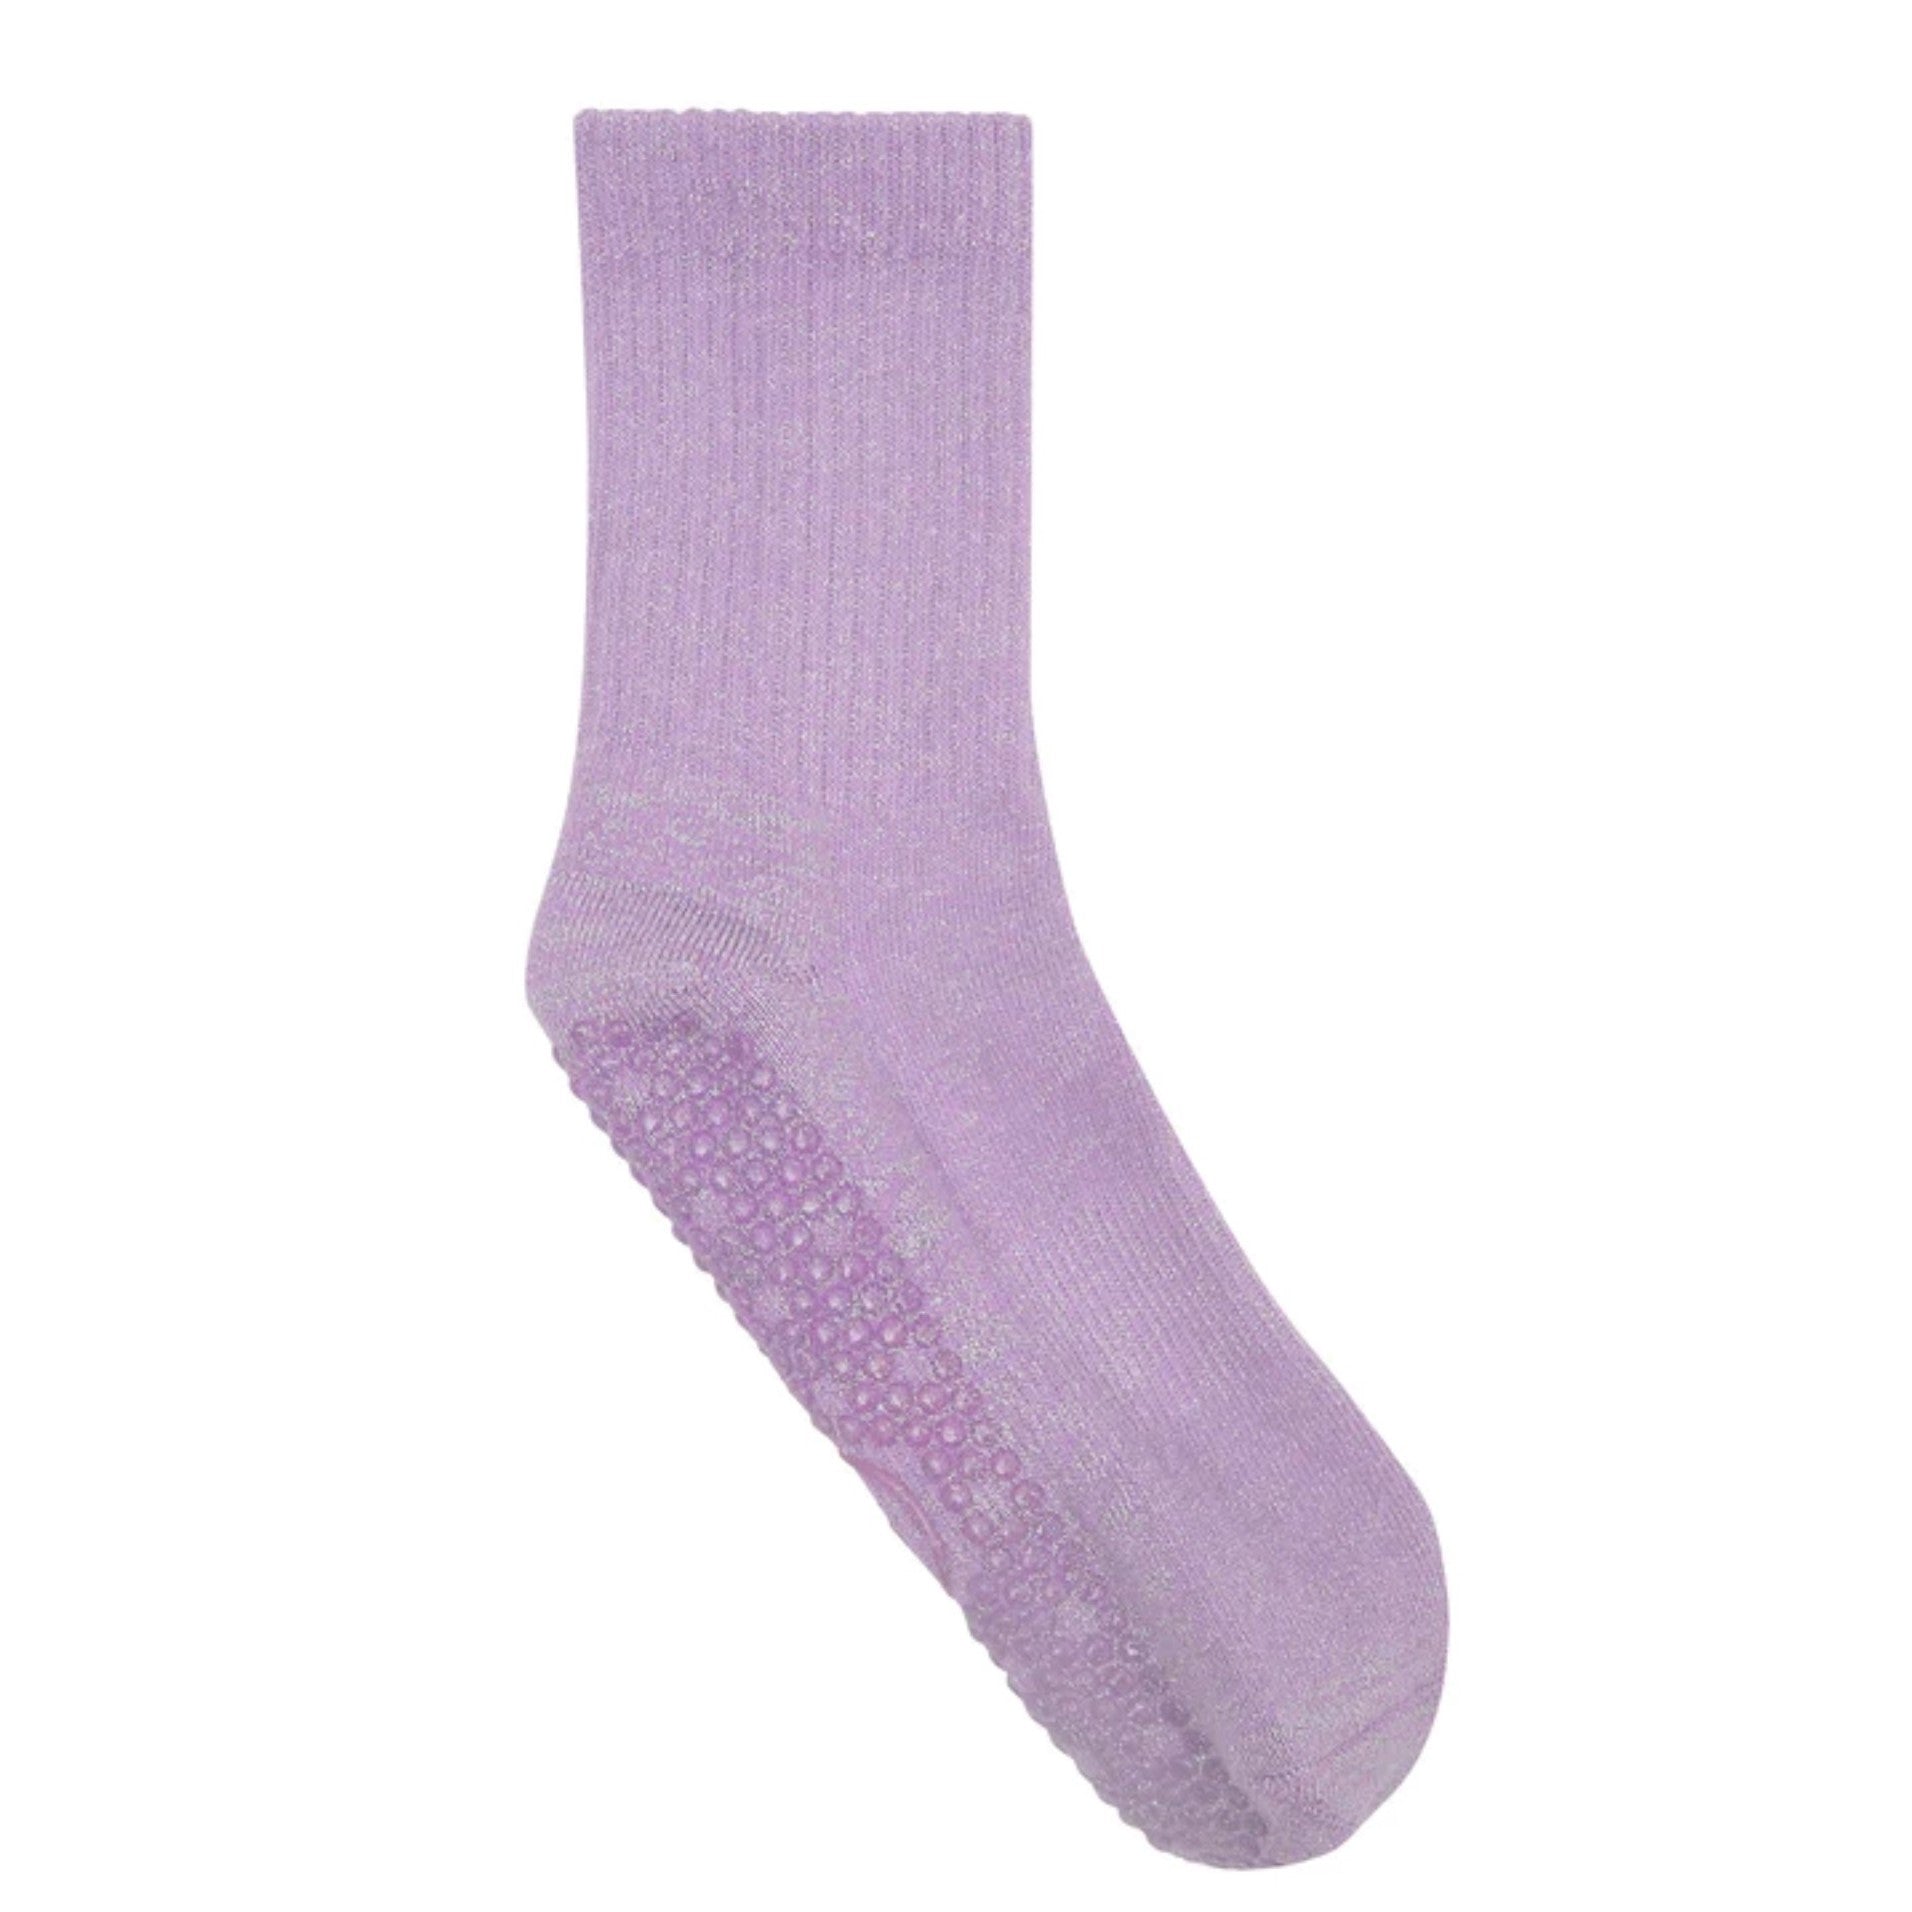 Pure Barre - Purple Sticky Grip - Black Socks - S/M - NEW Fast